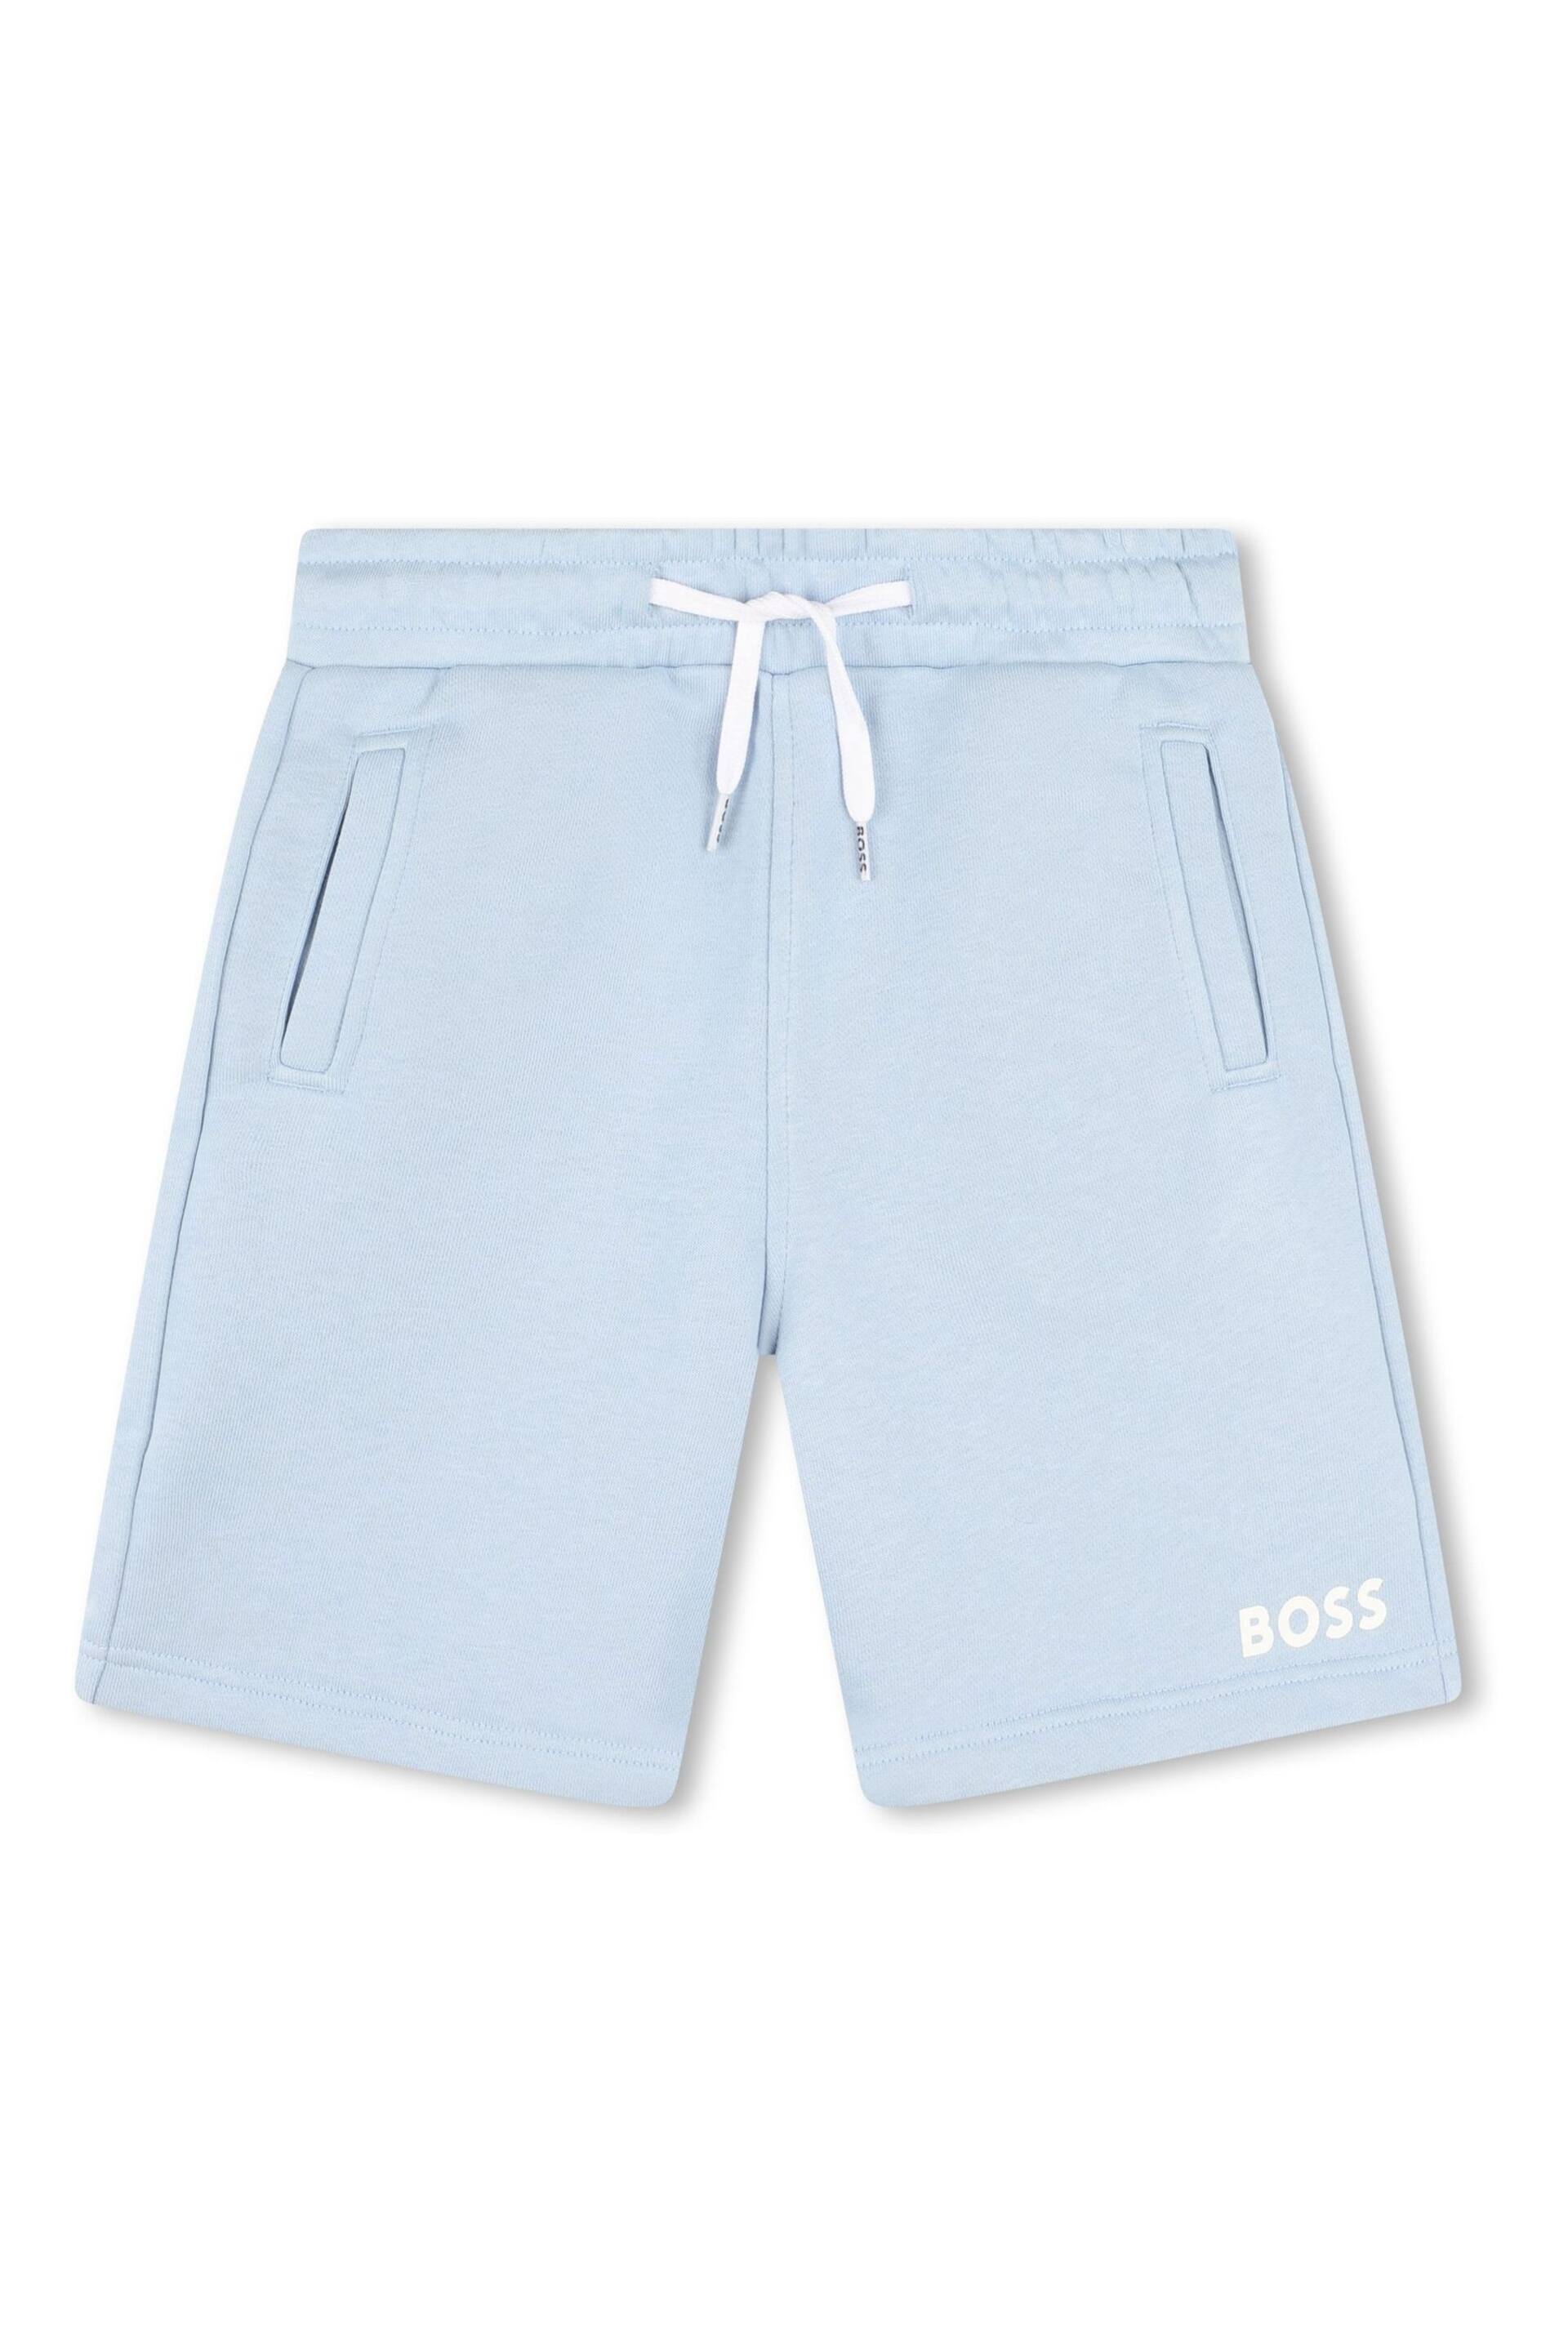 BOSS Blue Logo Jersey Shorts - Image 1 of 2